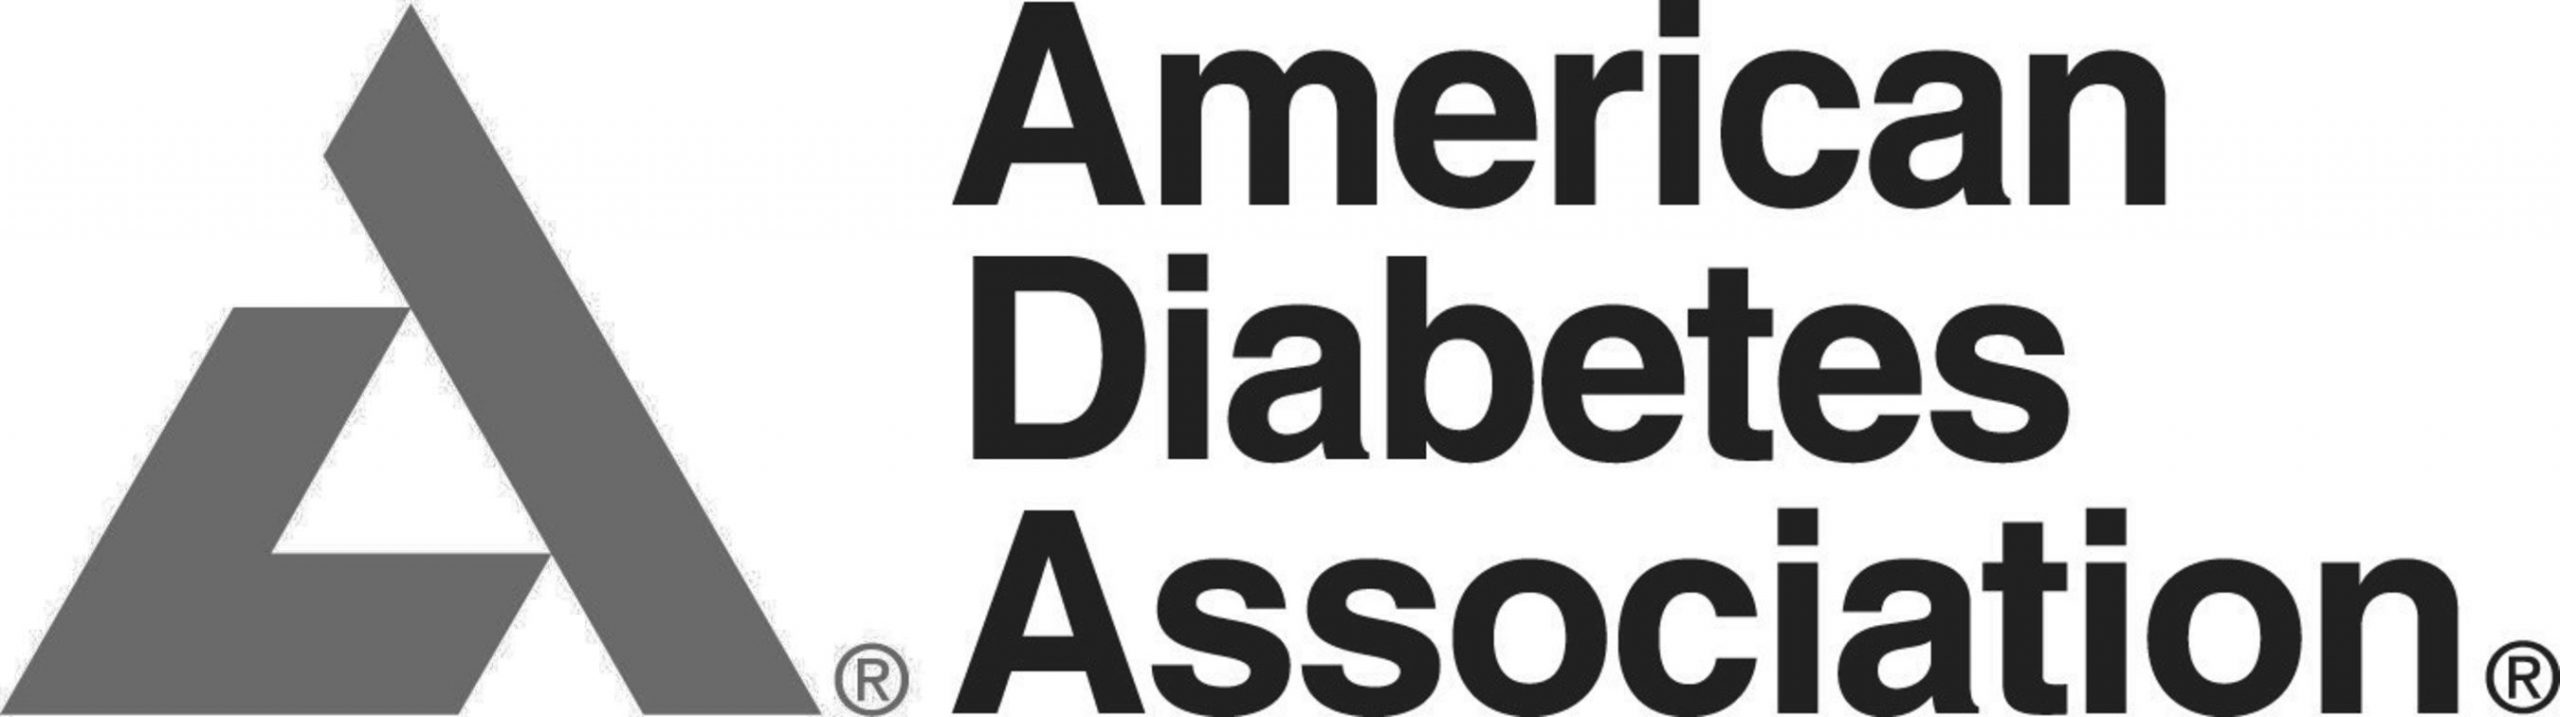 (PRNewsFoto/American Diabetes Association)